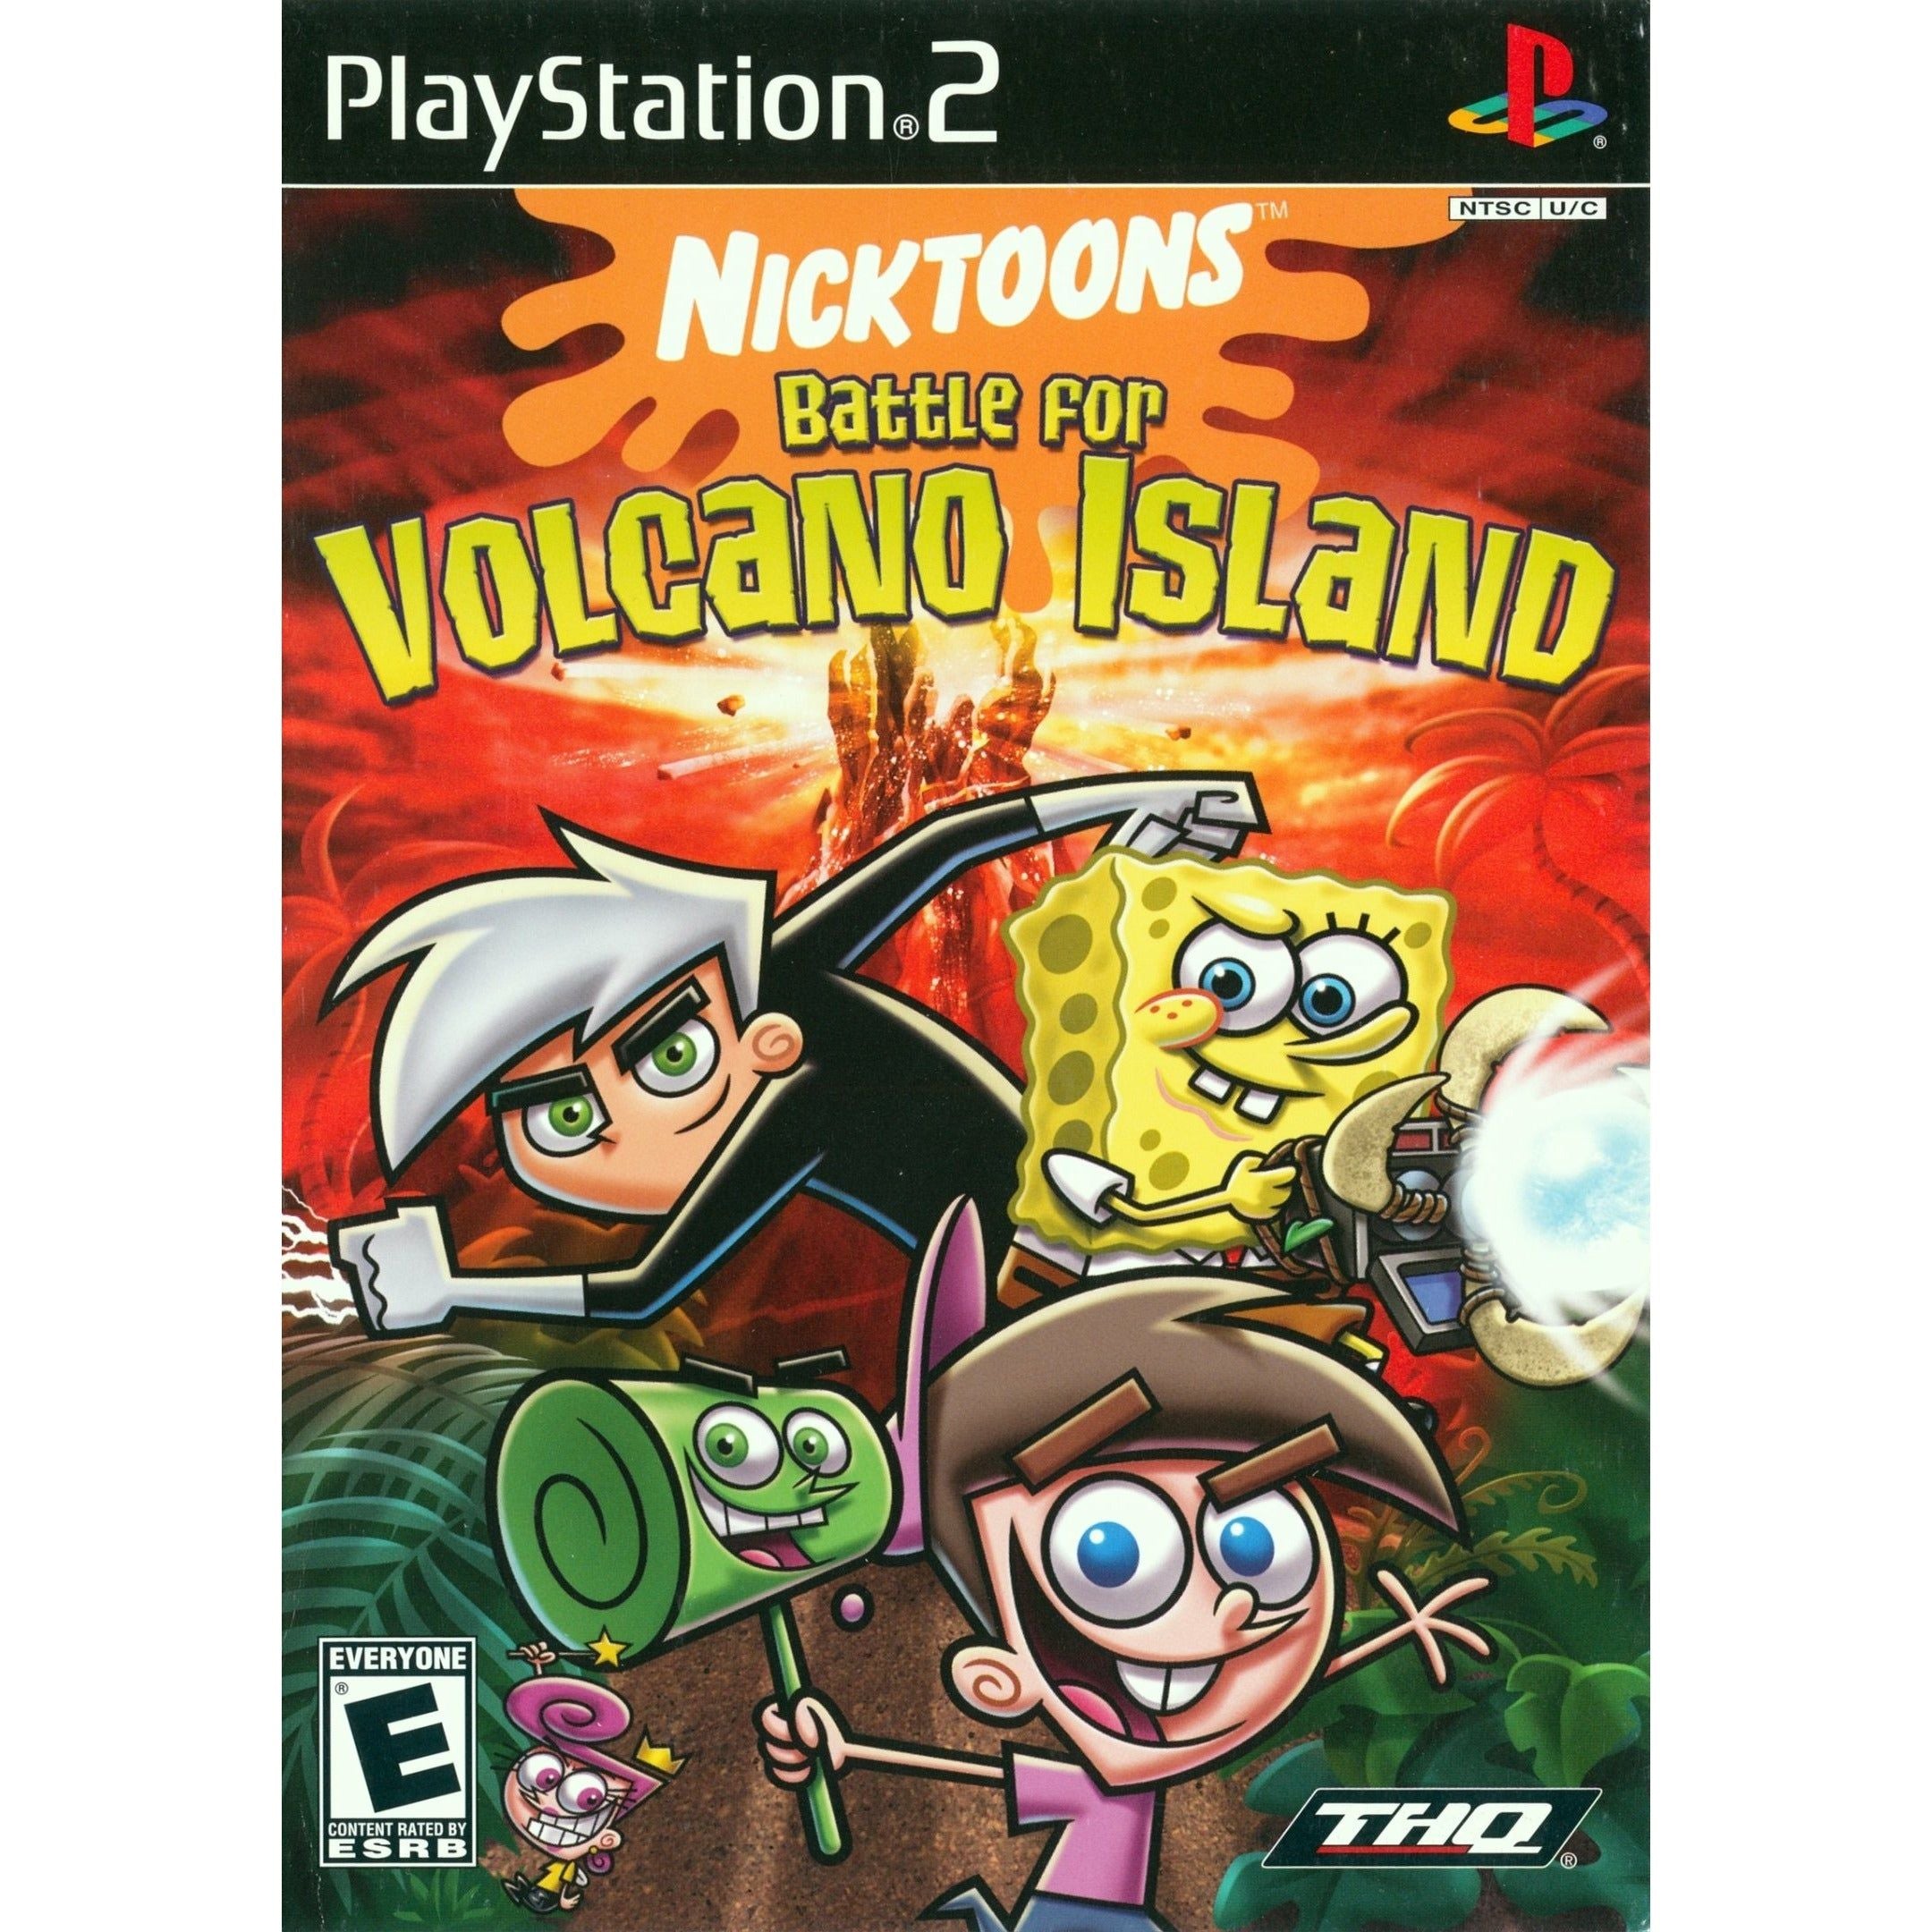 PS2 - Nicktoons Battle for Volcano Island